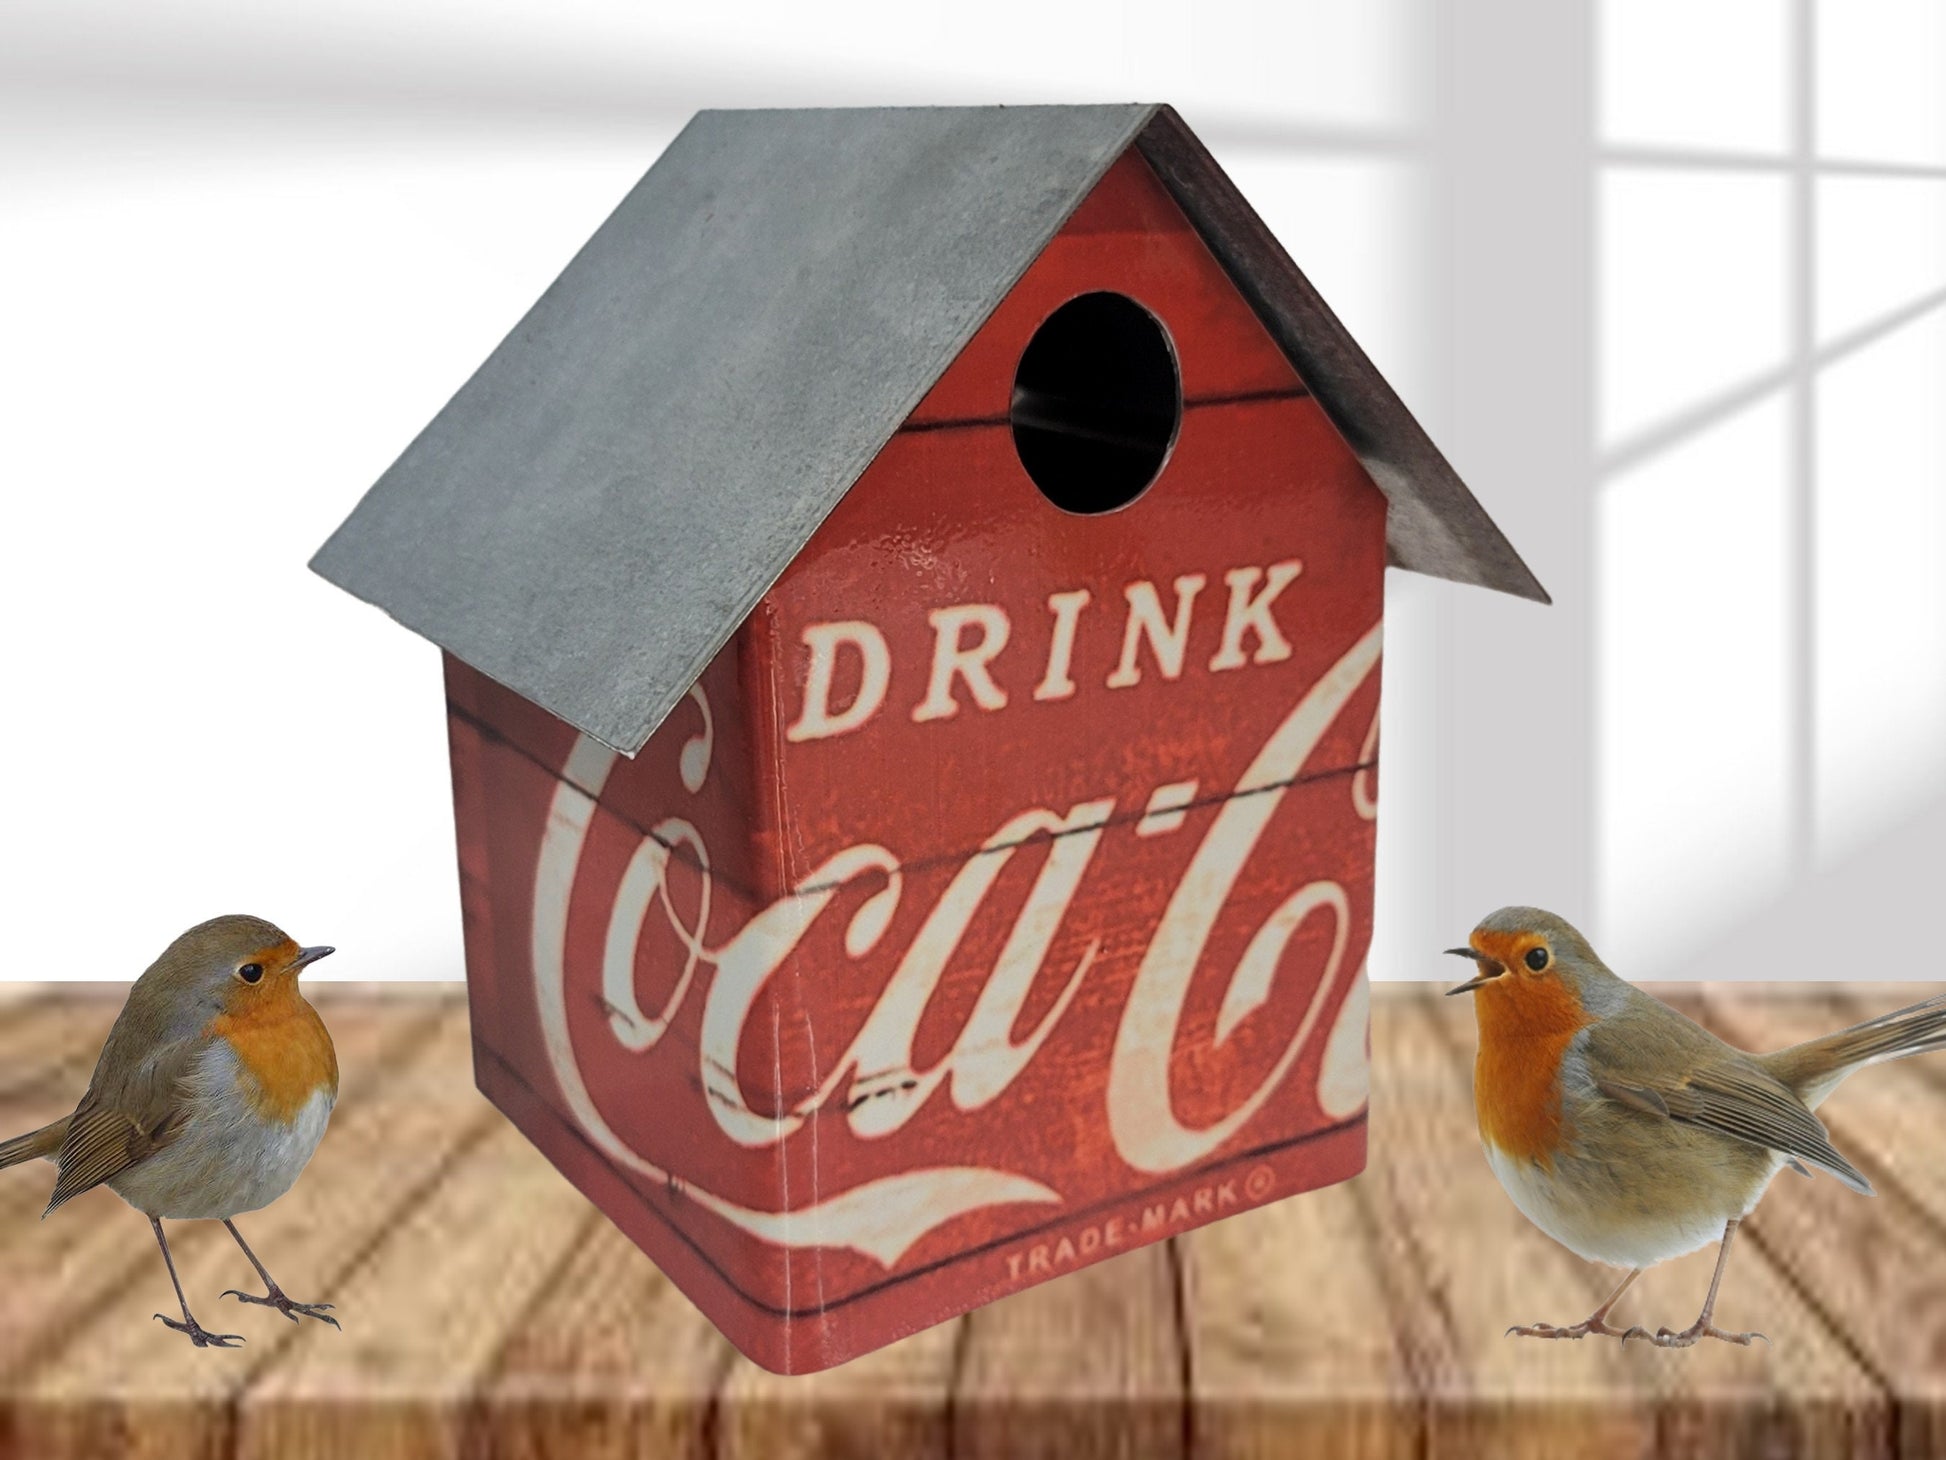 birdhouse | bird house | farmhouse decor | garden decor | kitty cat | handmade by me